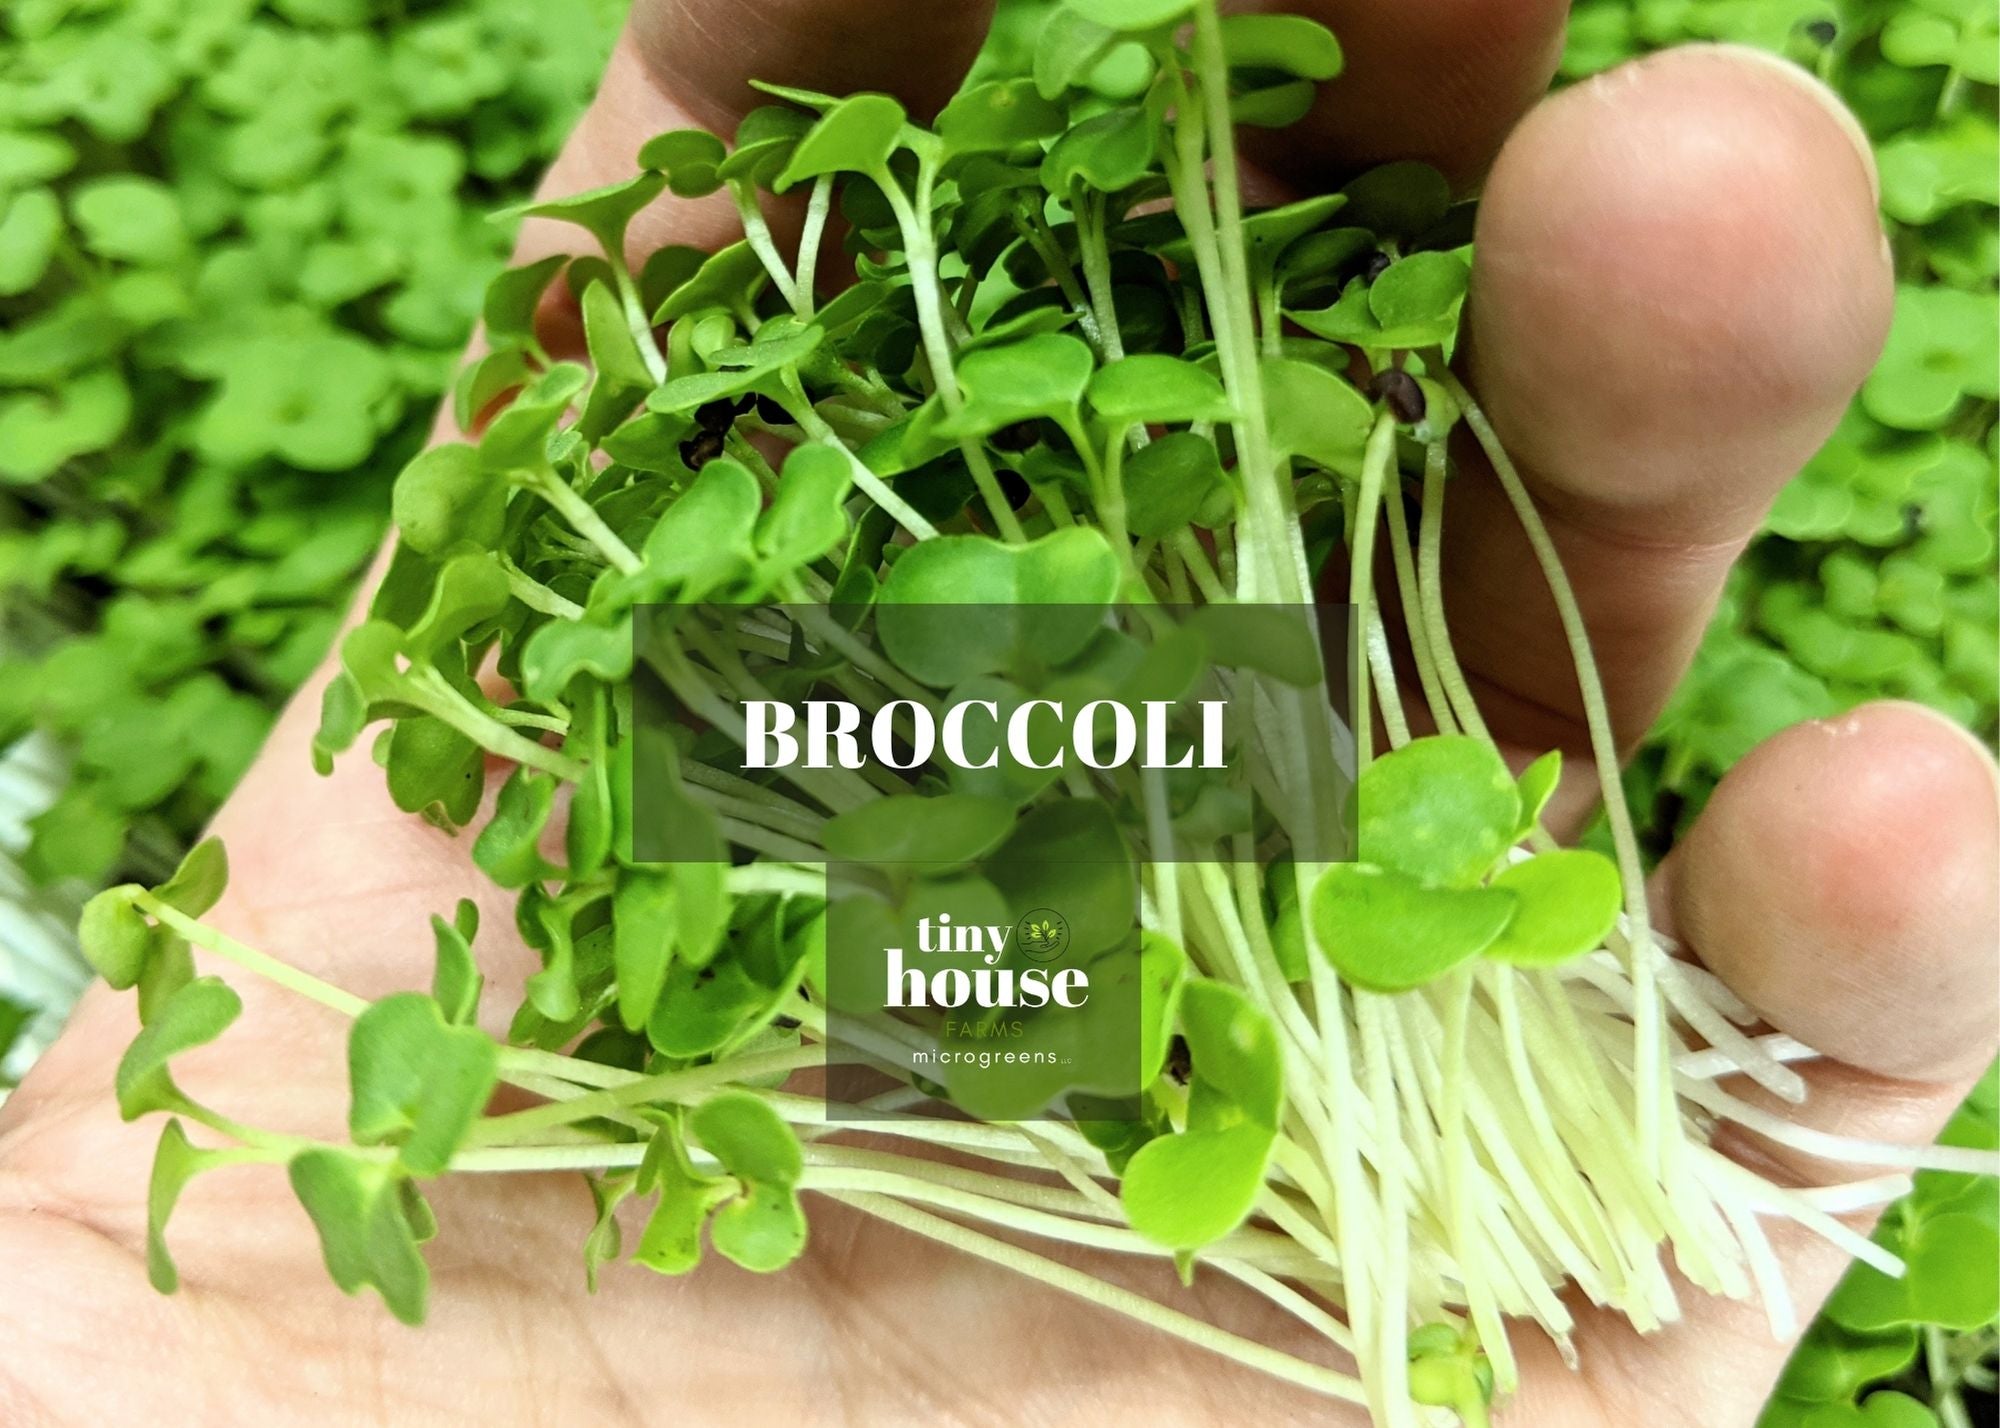 Broccoli Microgreens